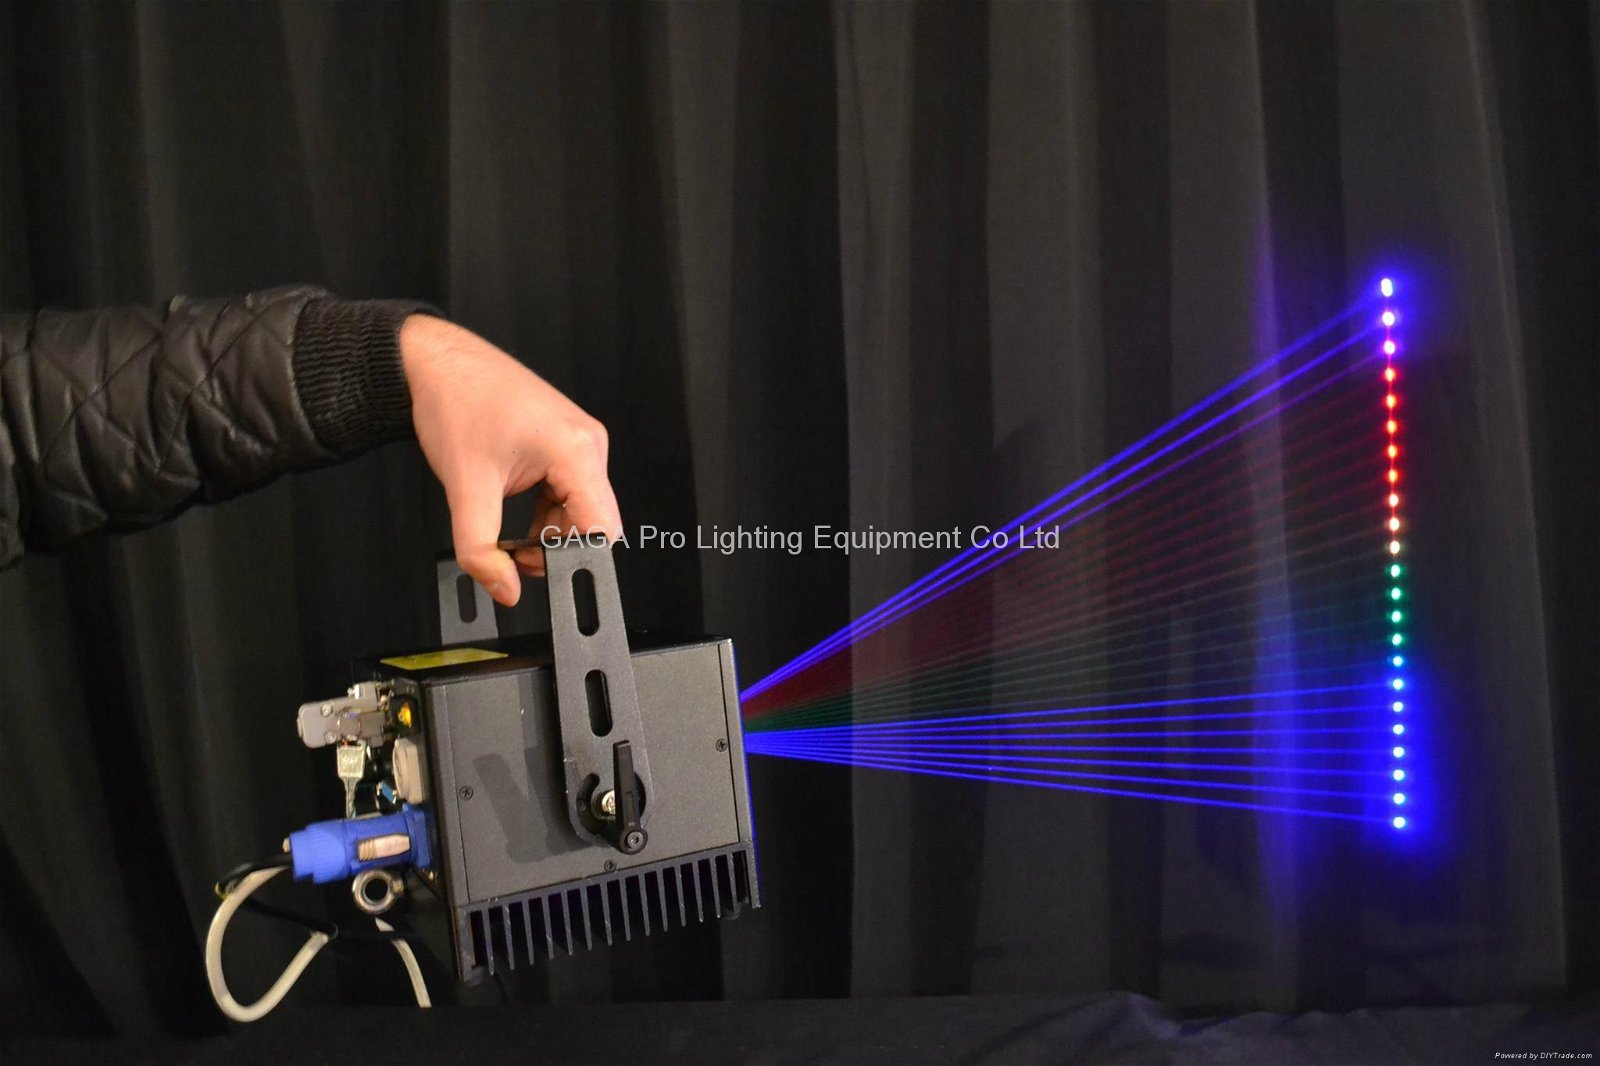 club laser rgb 2w animation Lazer light for club with 100khz - GA-D1800 -  GAGA (China Manufacturer) - Professional Lighting - Lighting